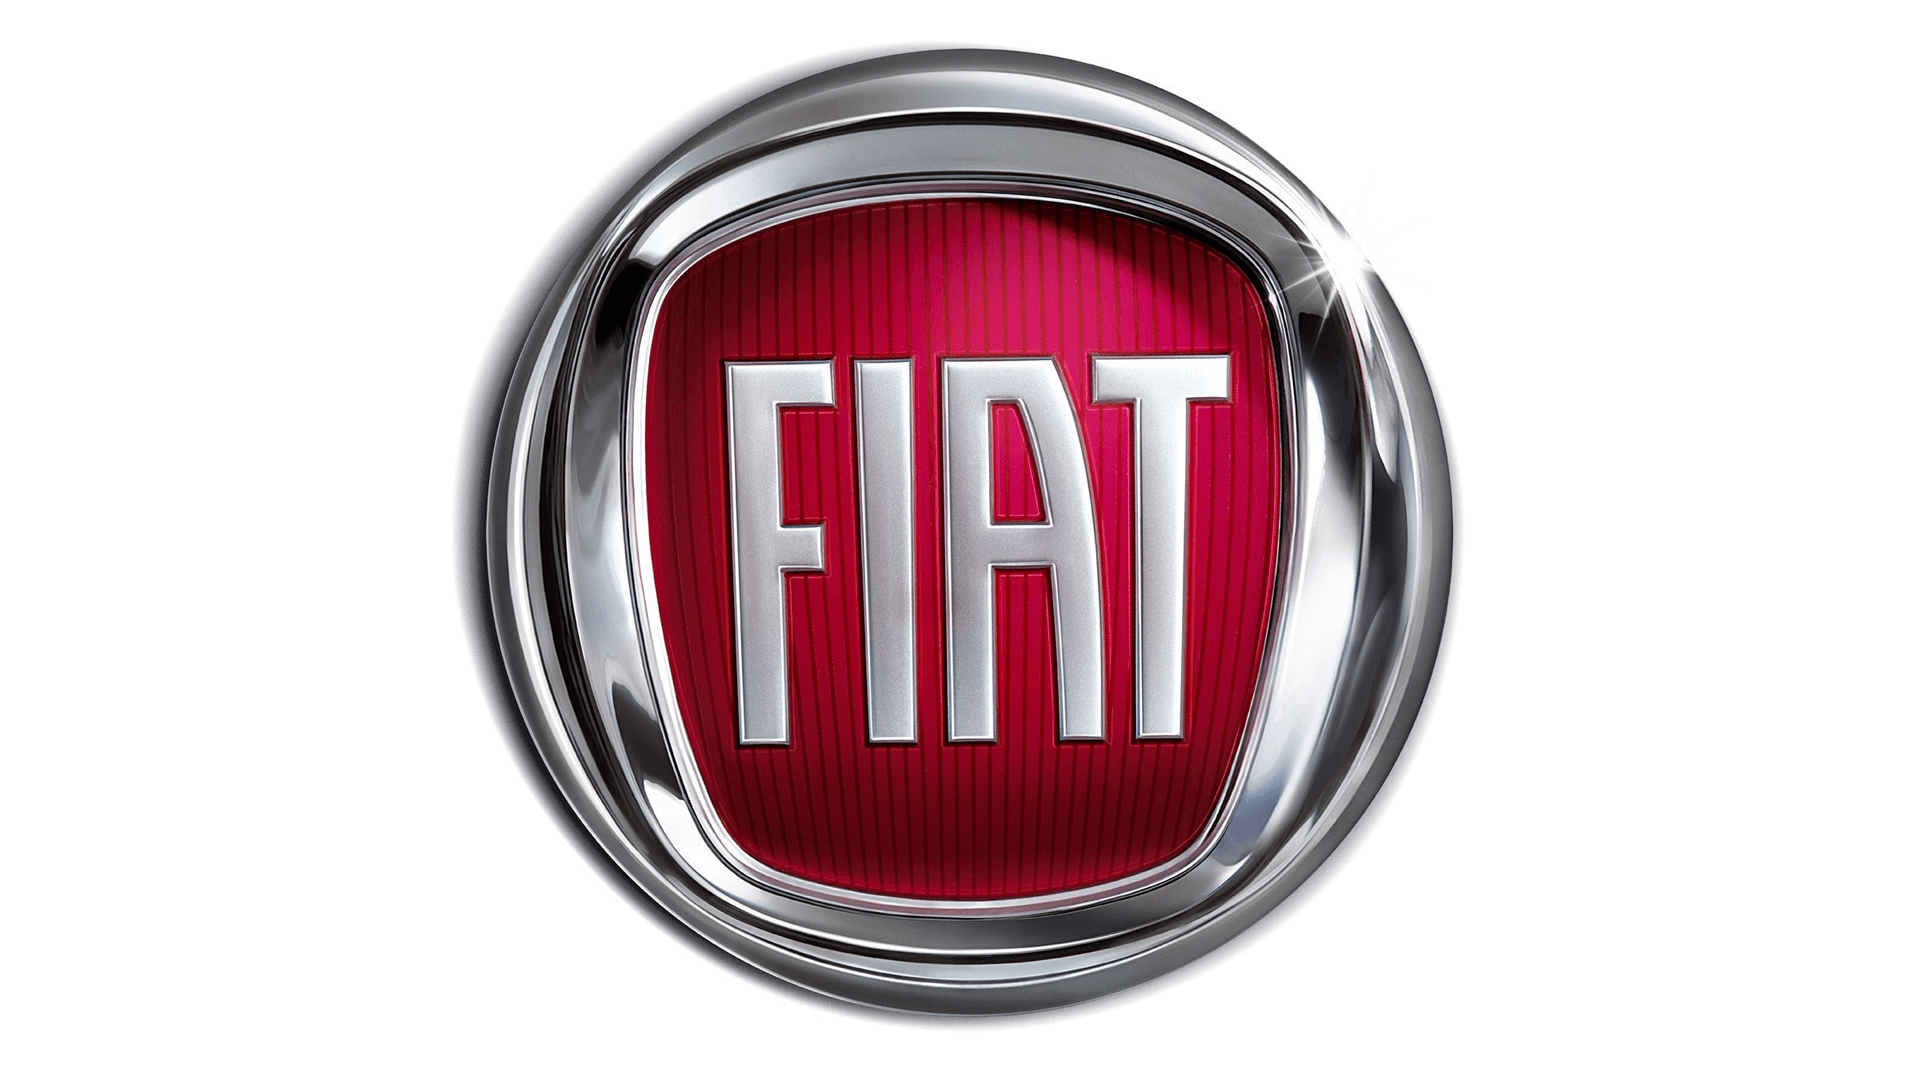 Fiat window sticker